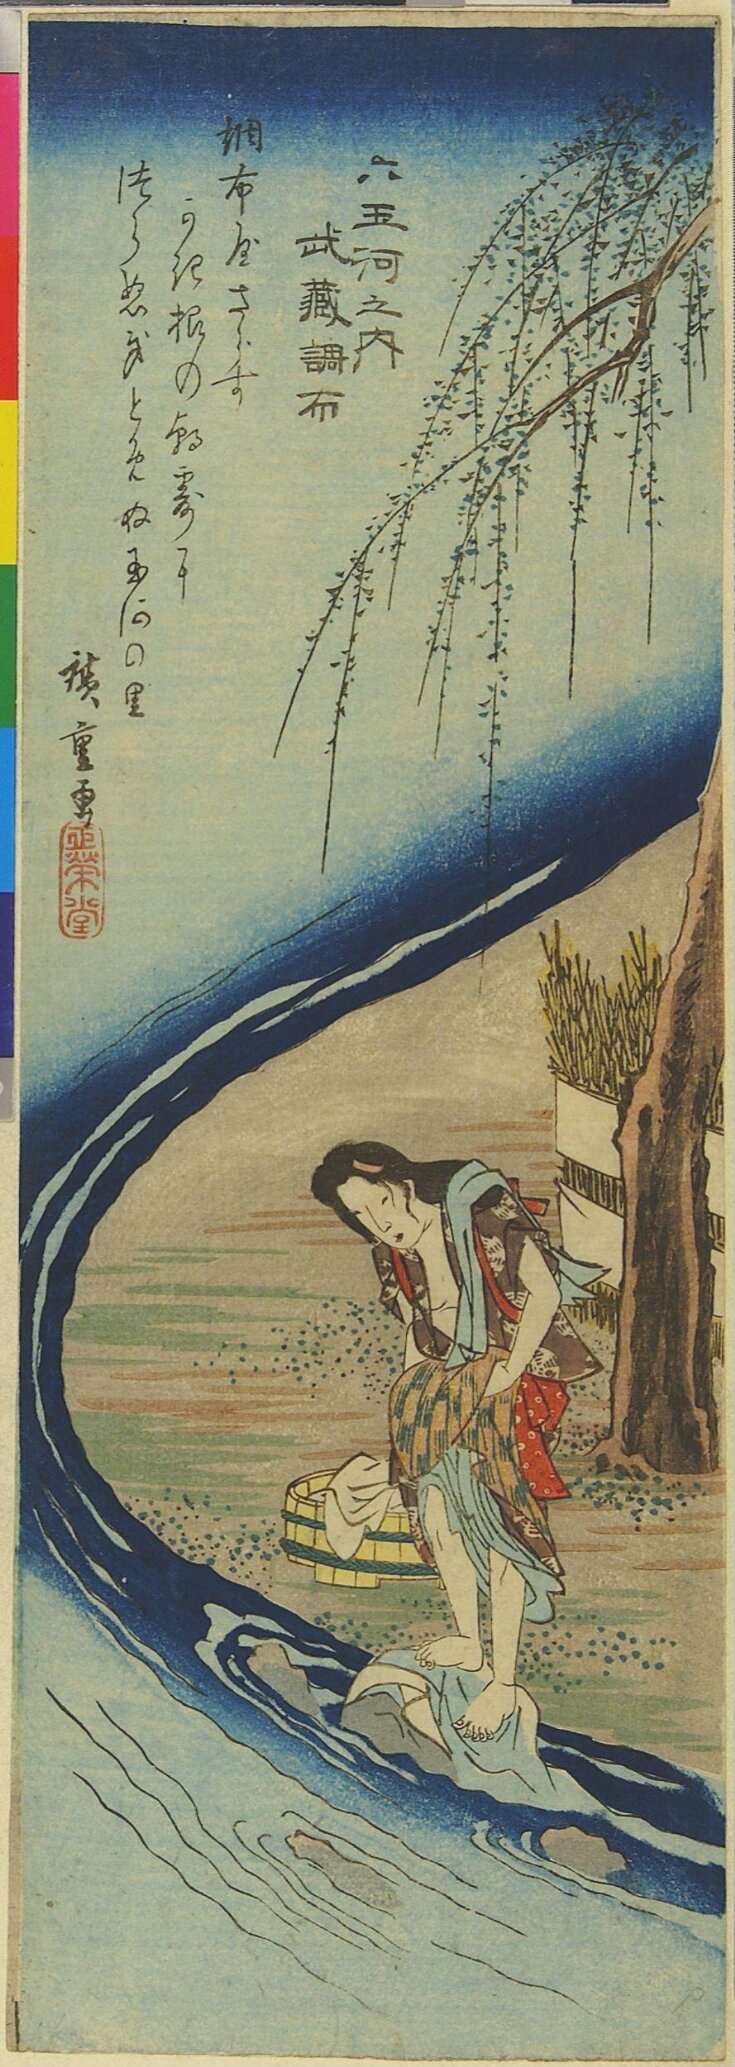 The Chōfu Jewel River in Musashi Province (Musashi Chōfu) top image